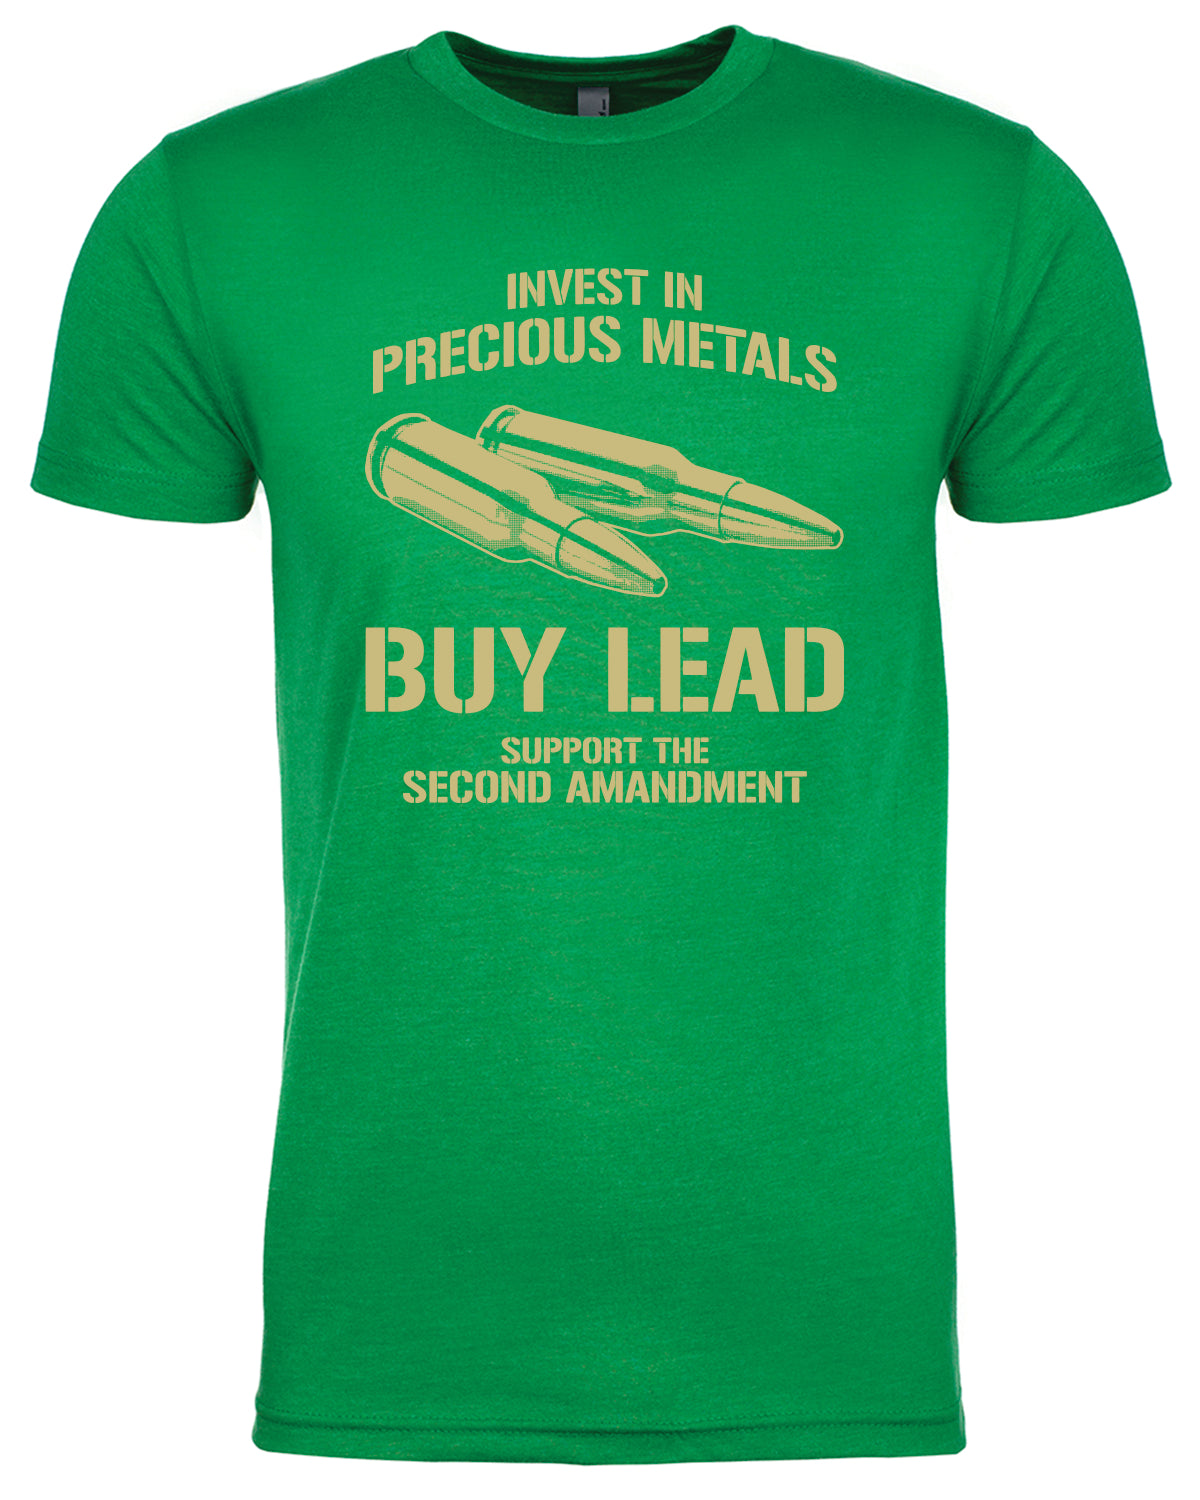 Invest in Precious Metals T-shirt